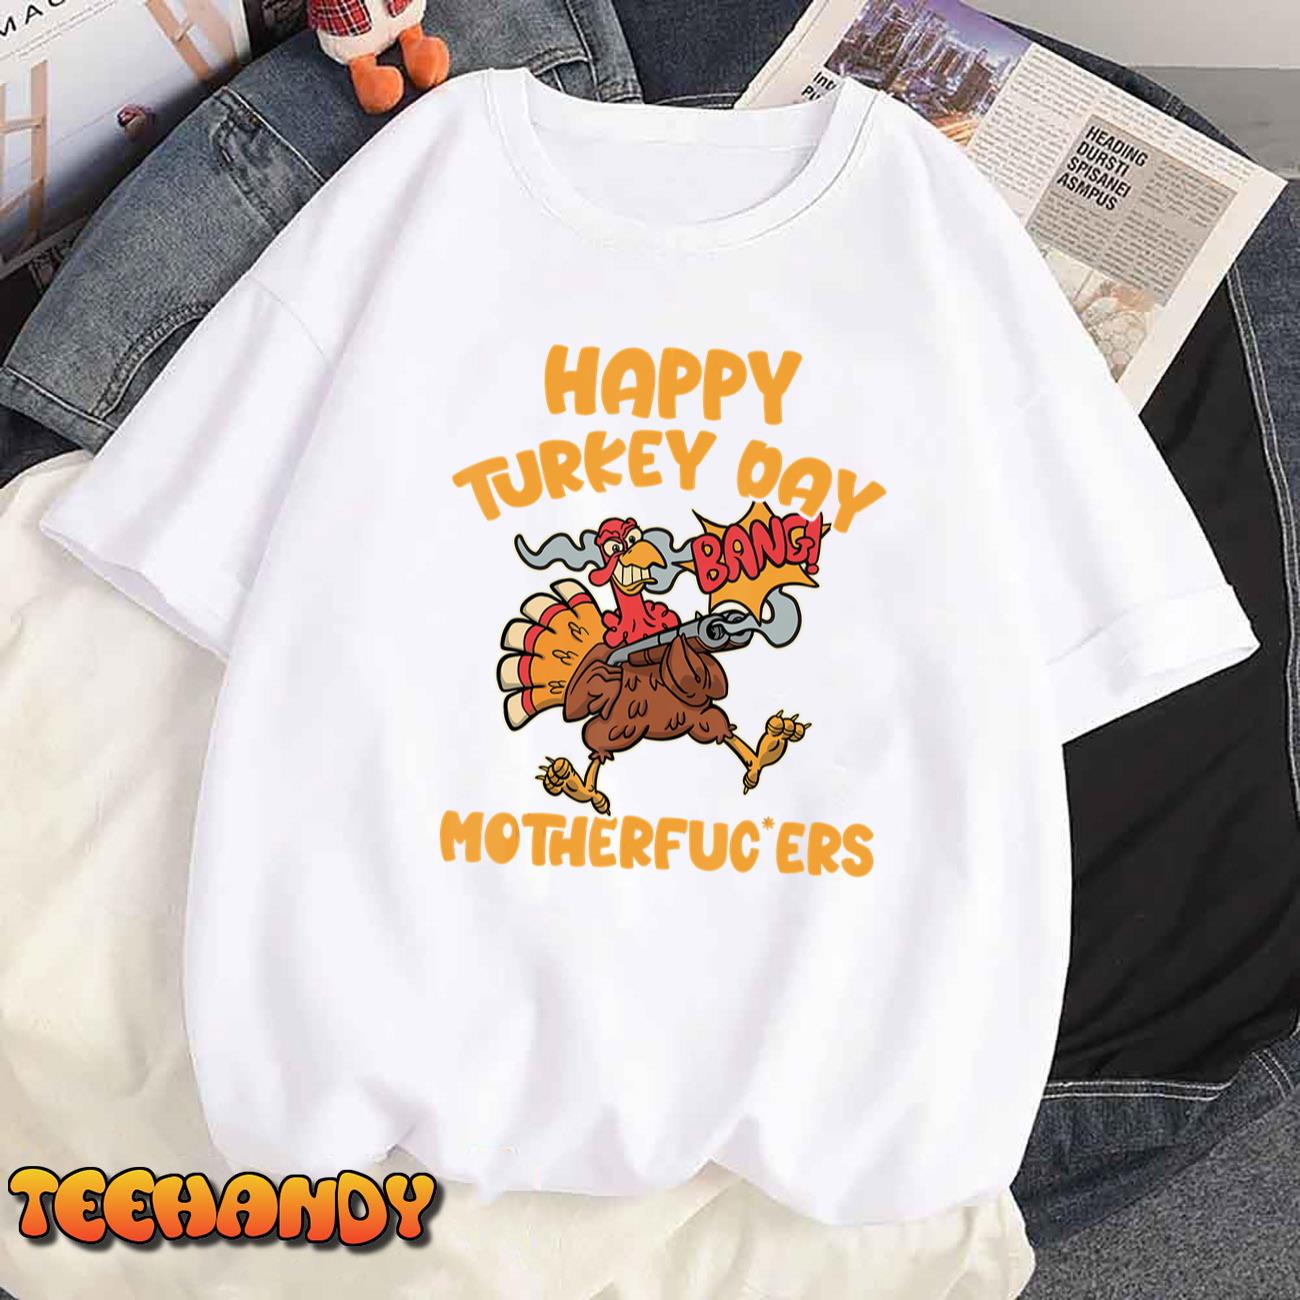 Thanksgiving Happy Turkey Day T-Shirt